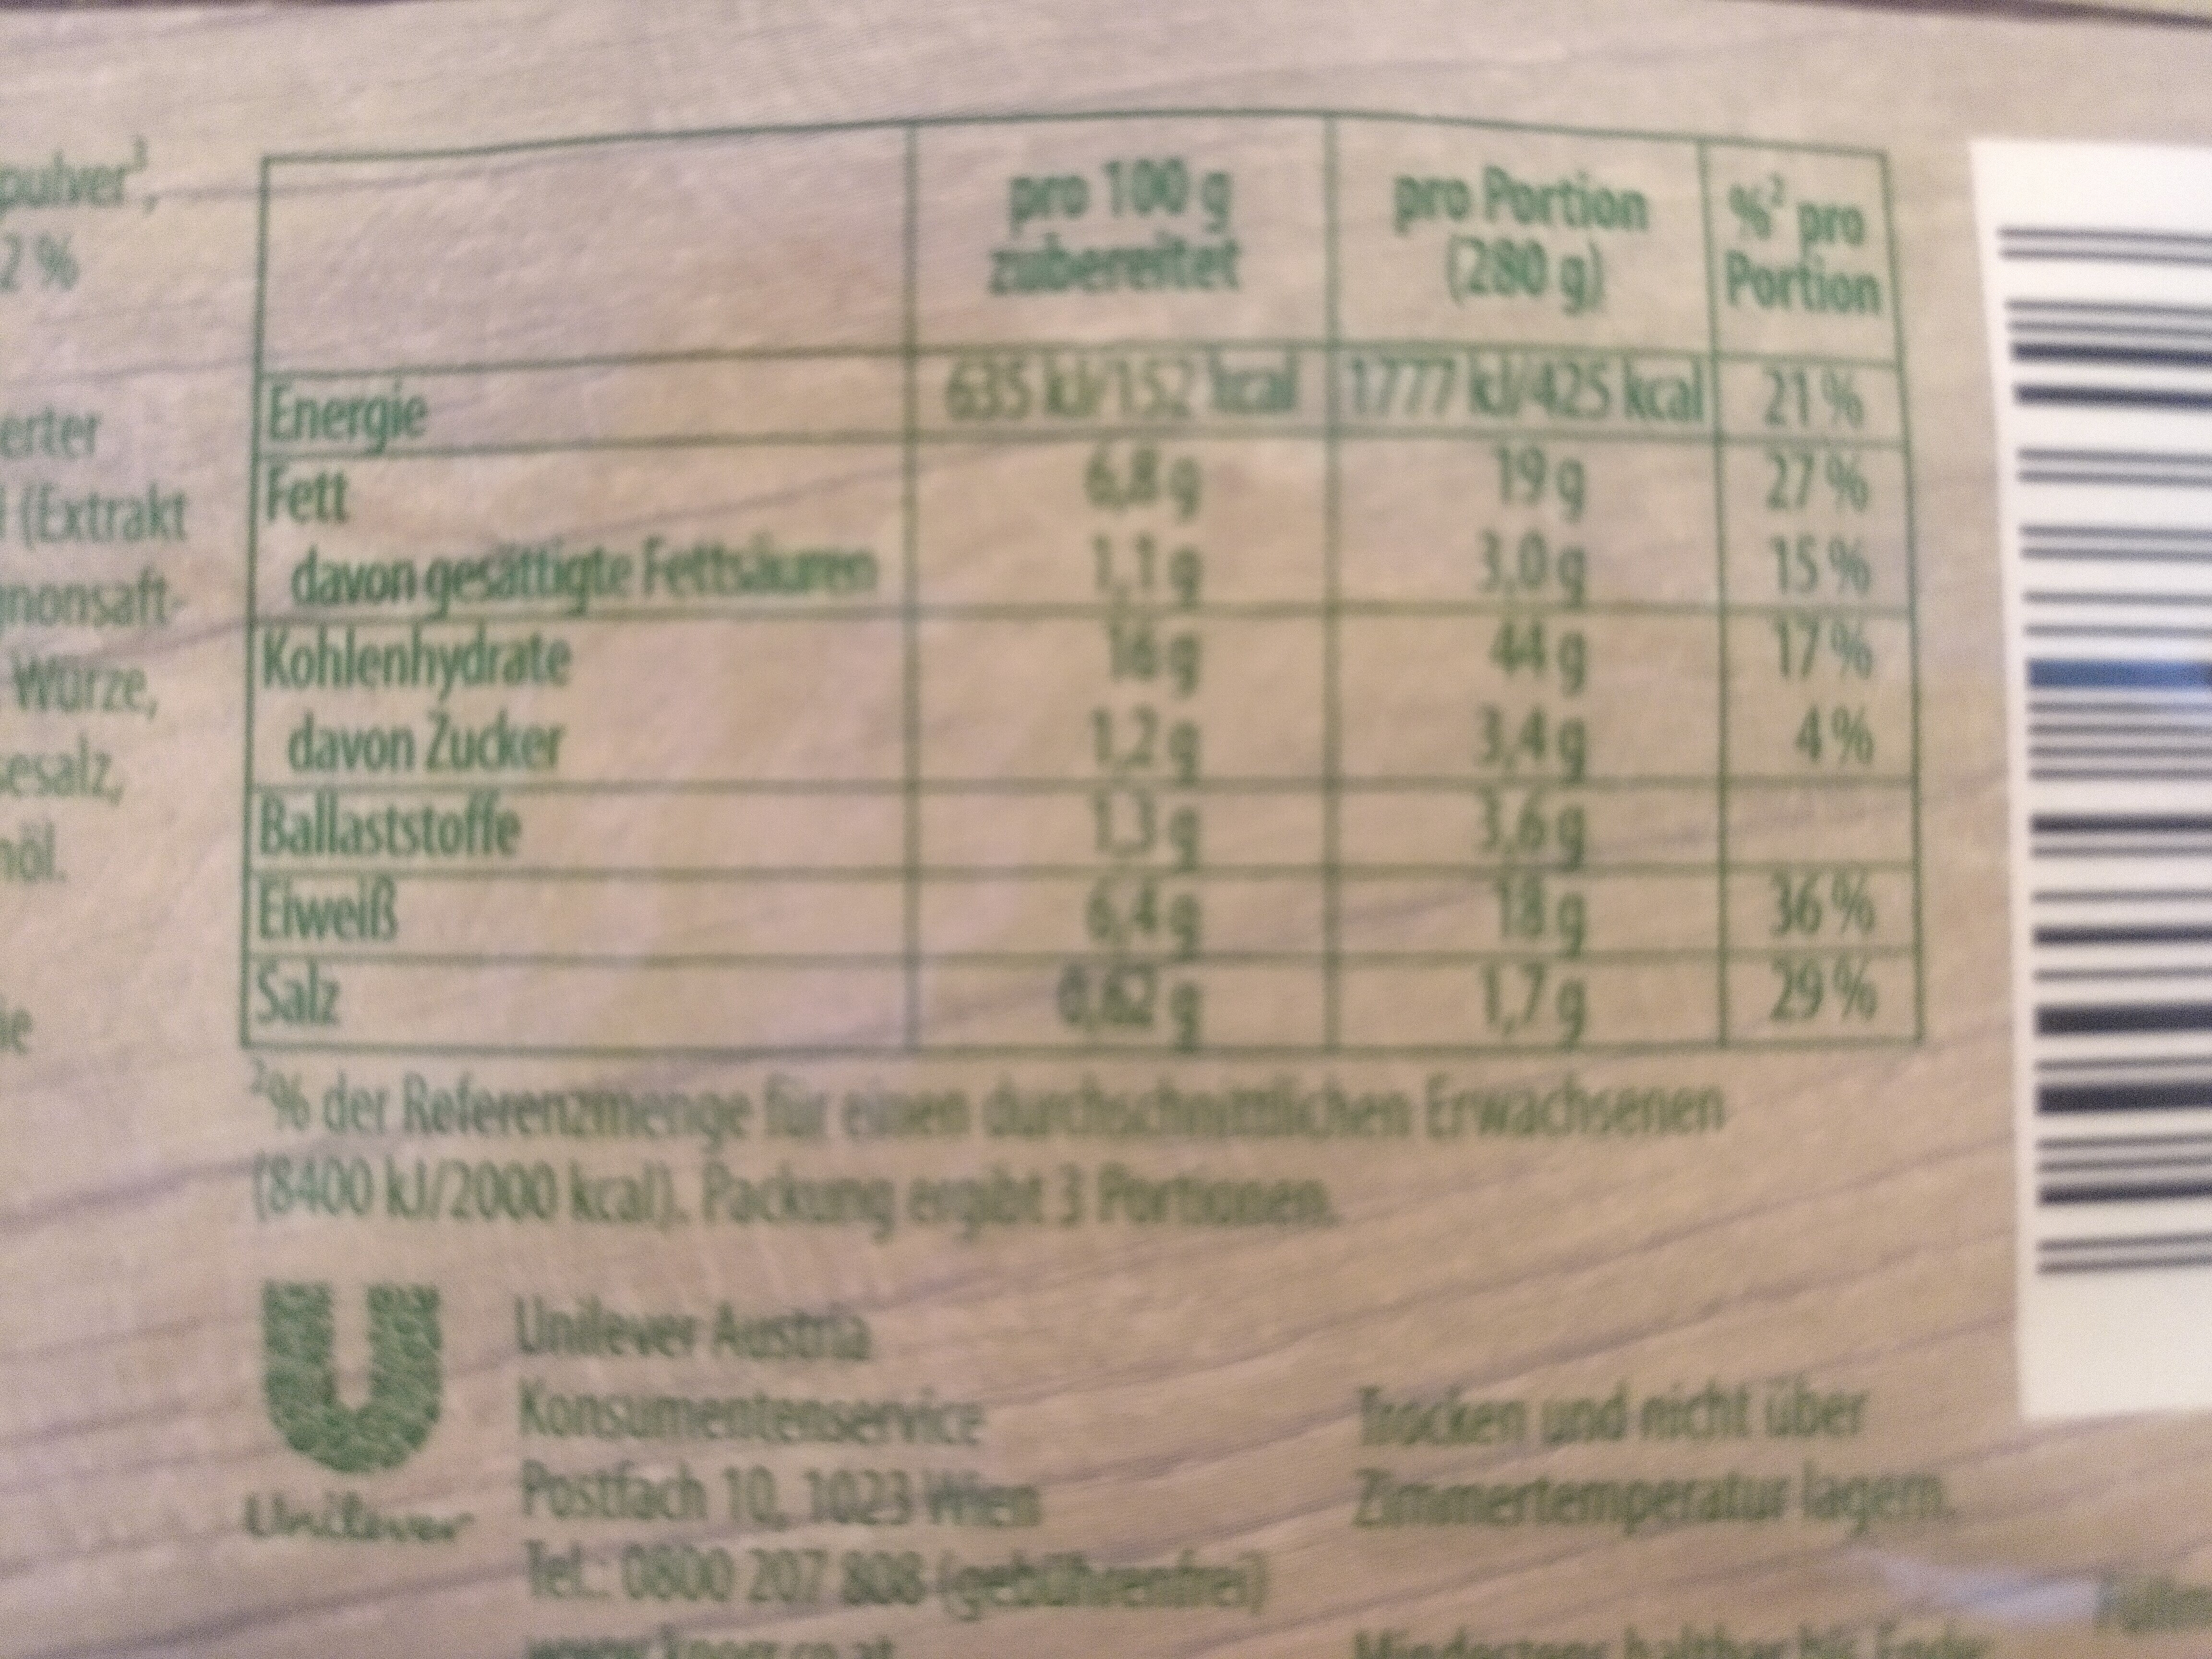 Knorr Basis, Jägerpfanne - Nährwertangaben